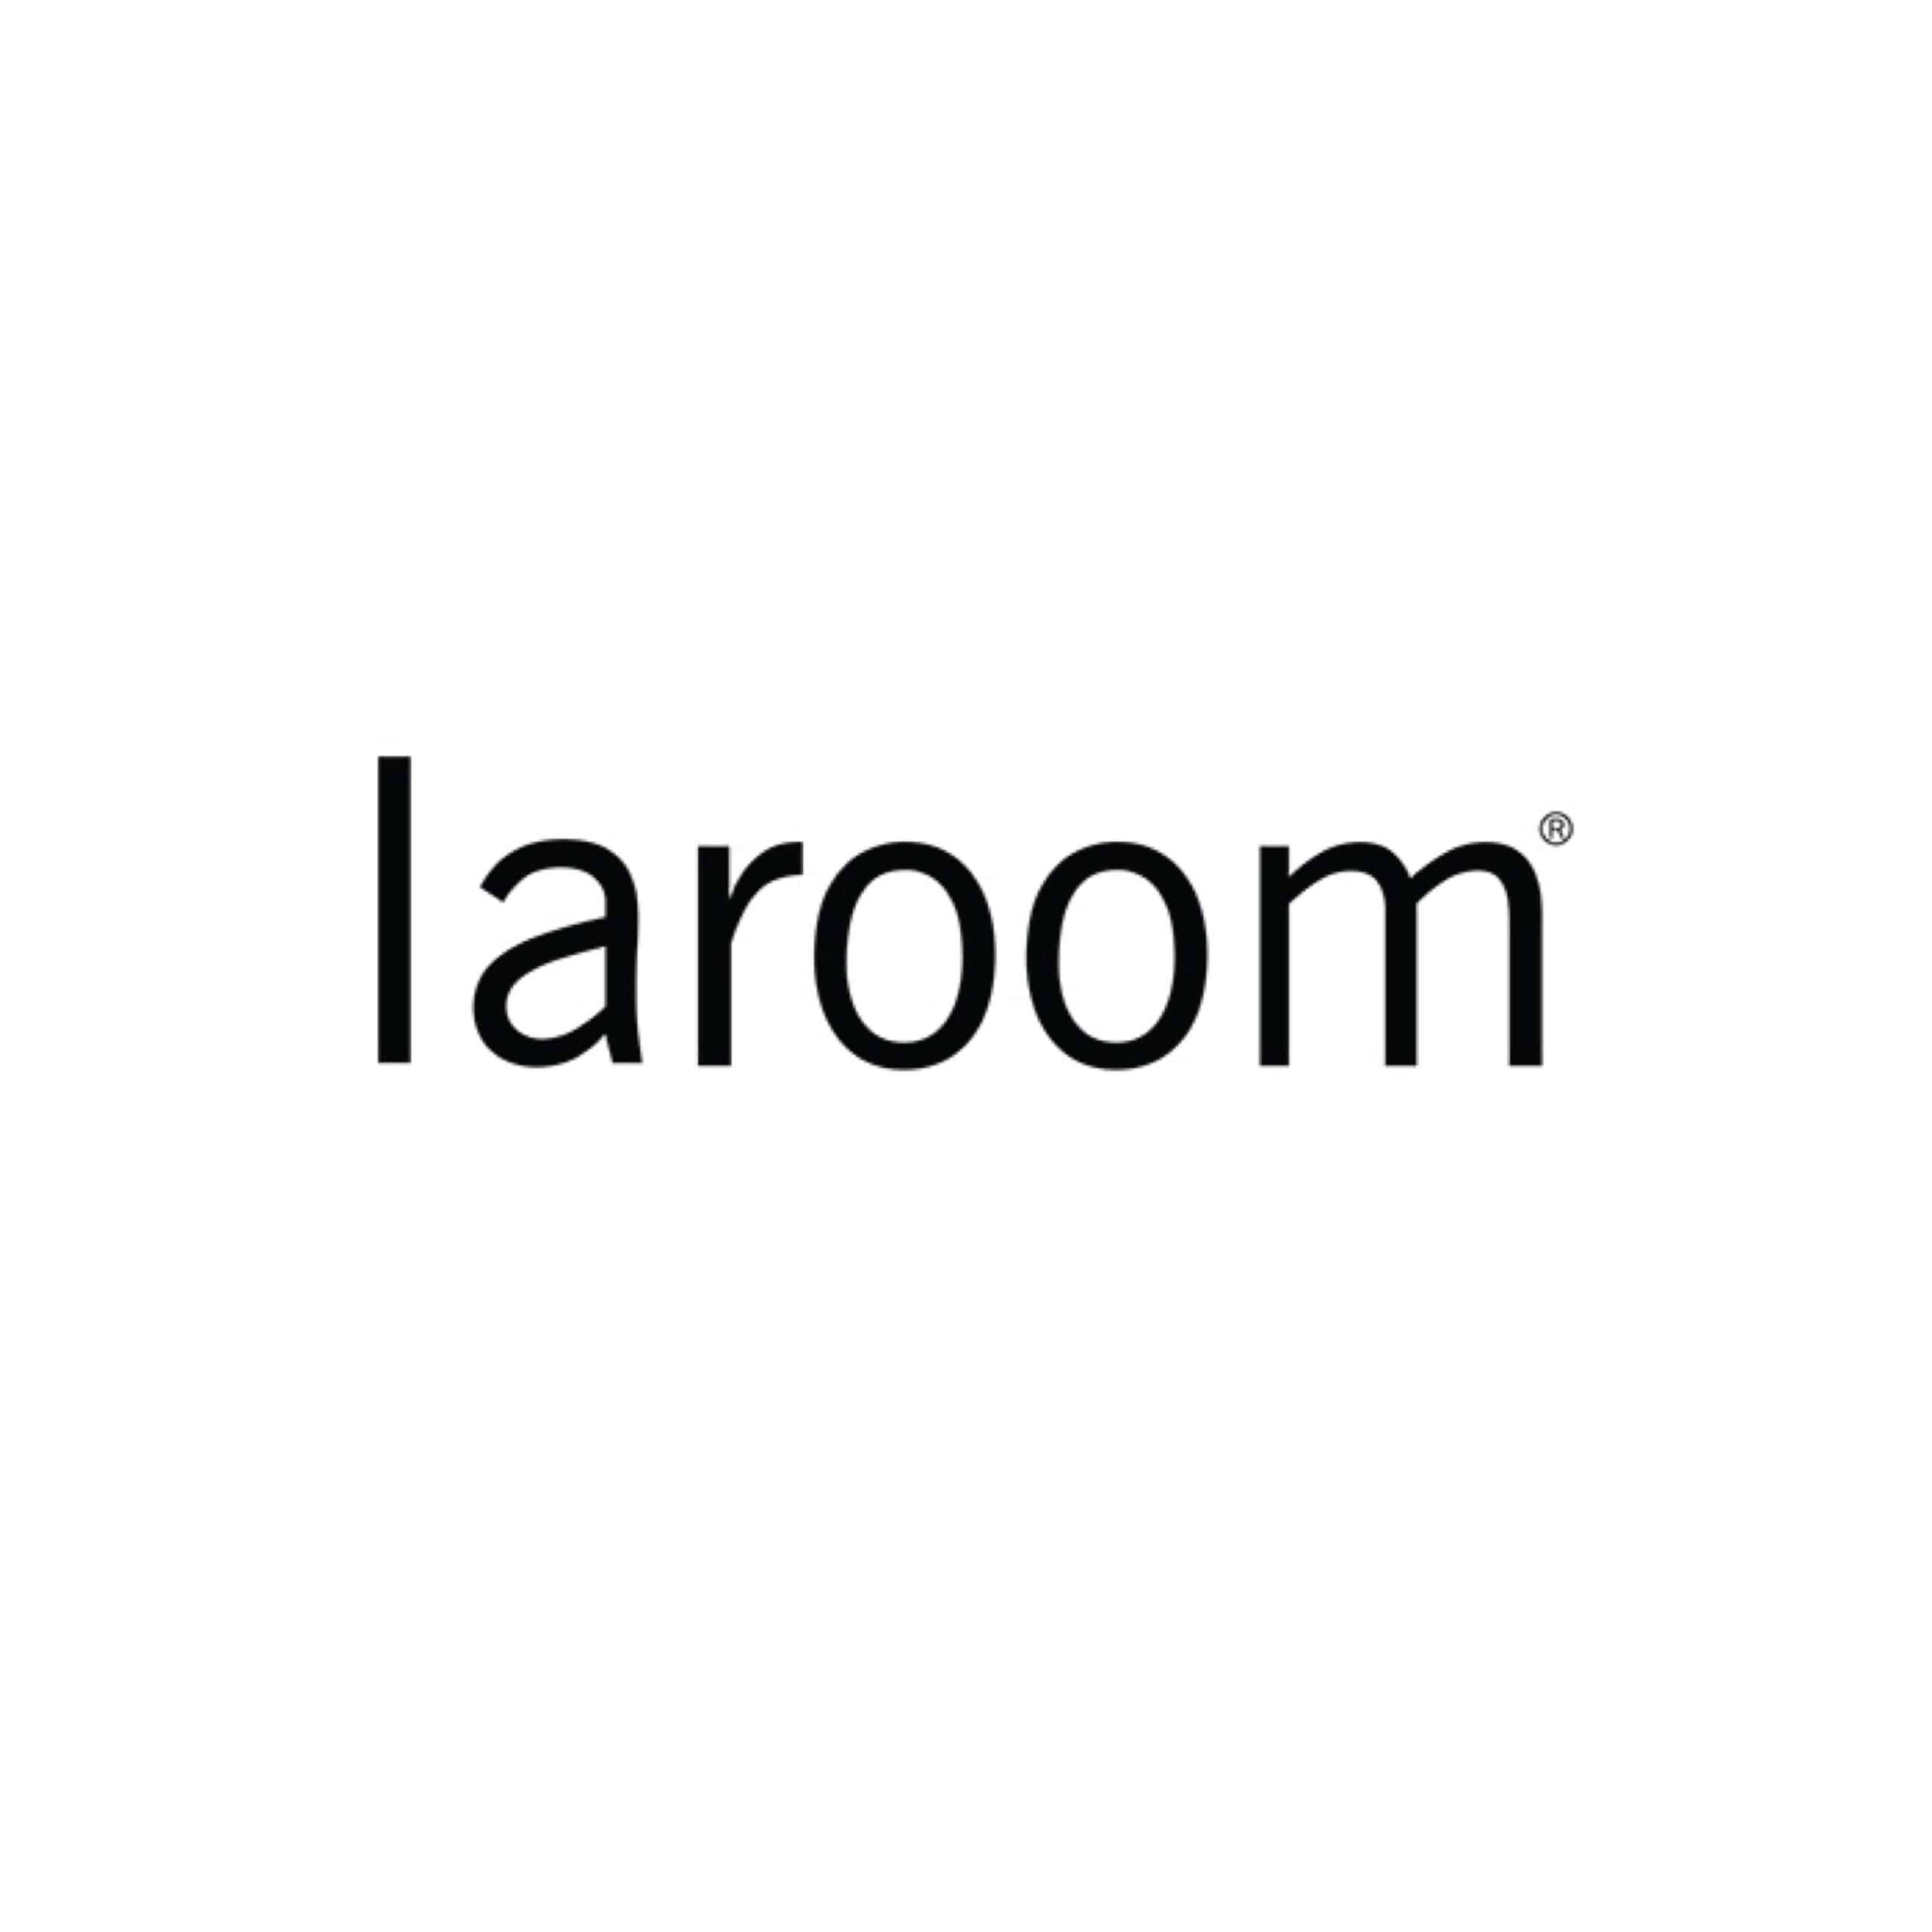 Laroom